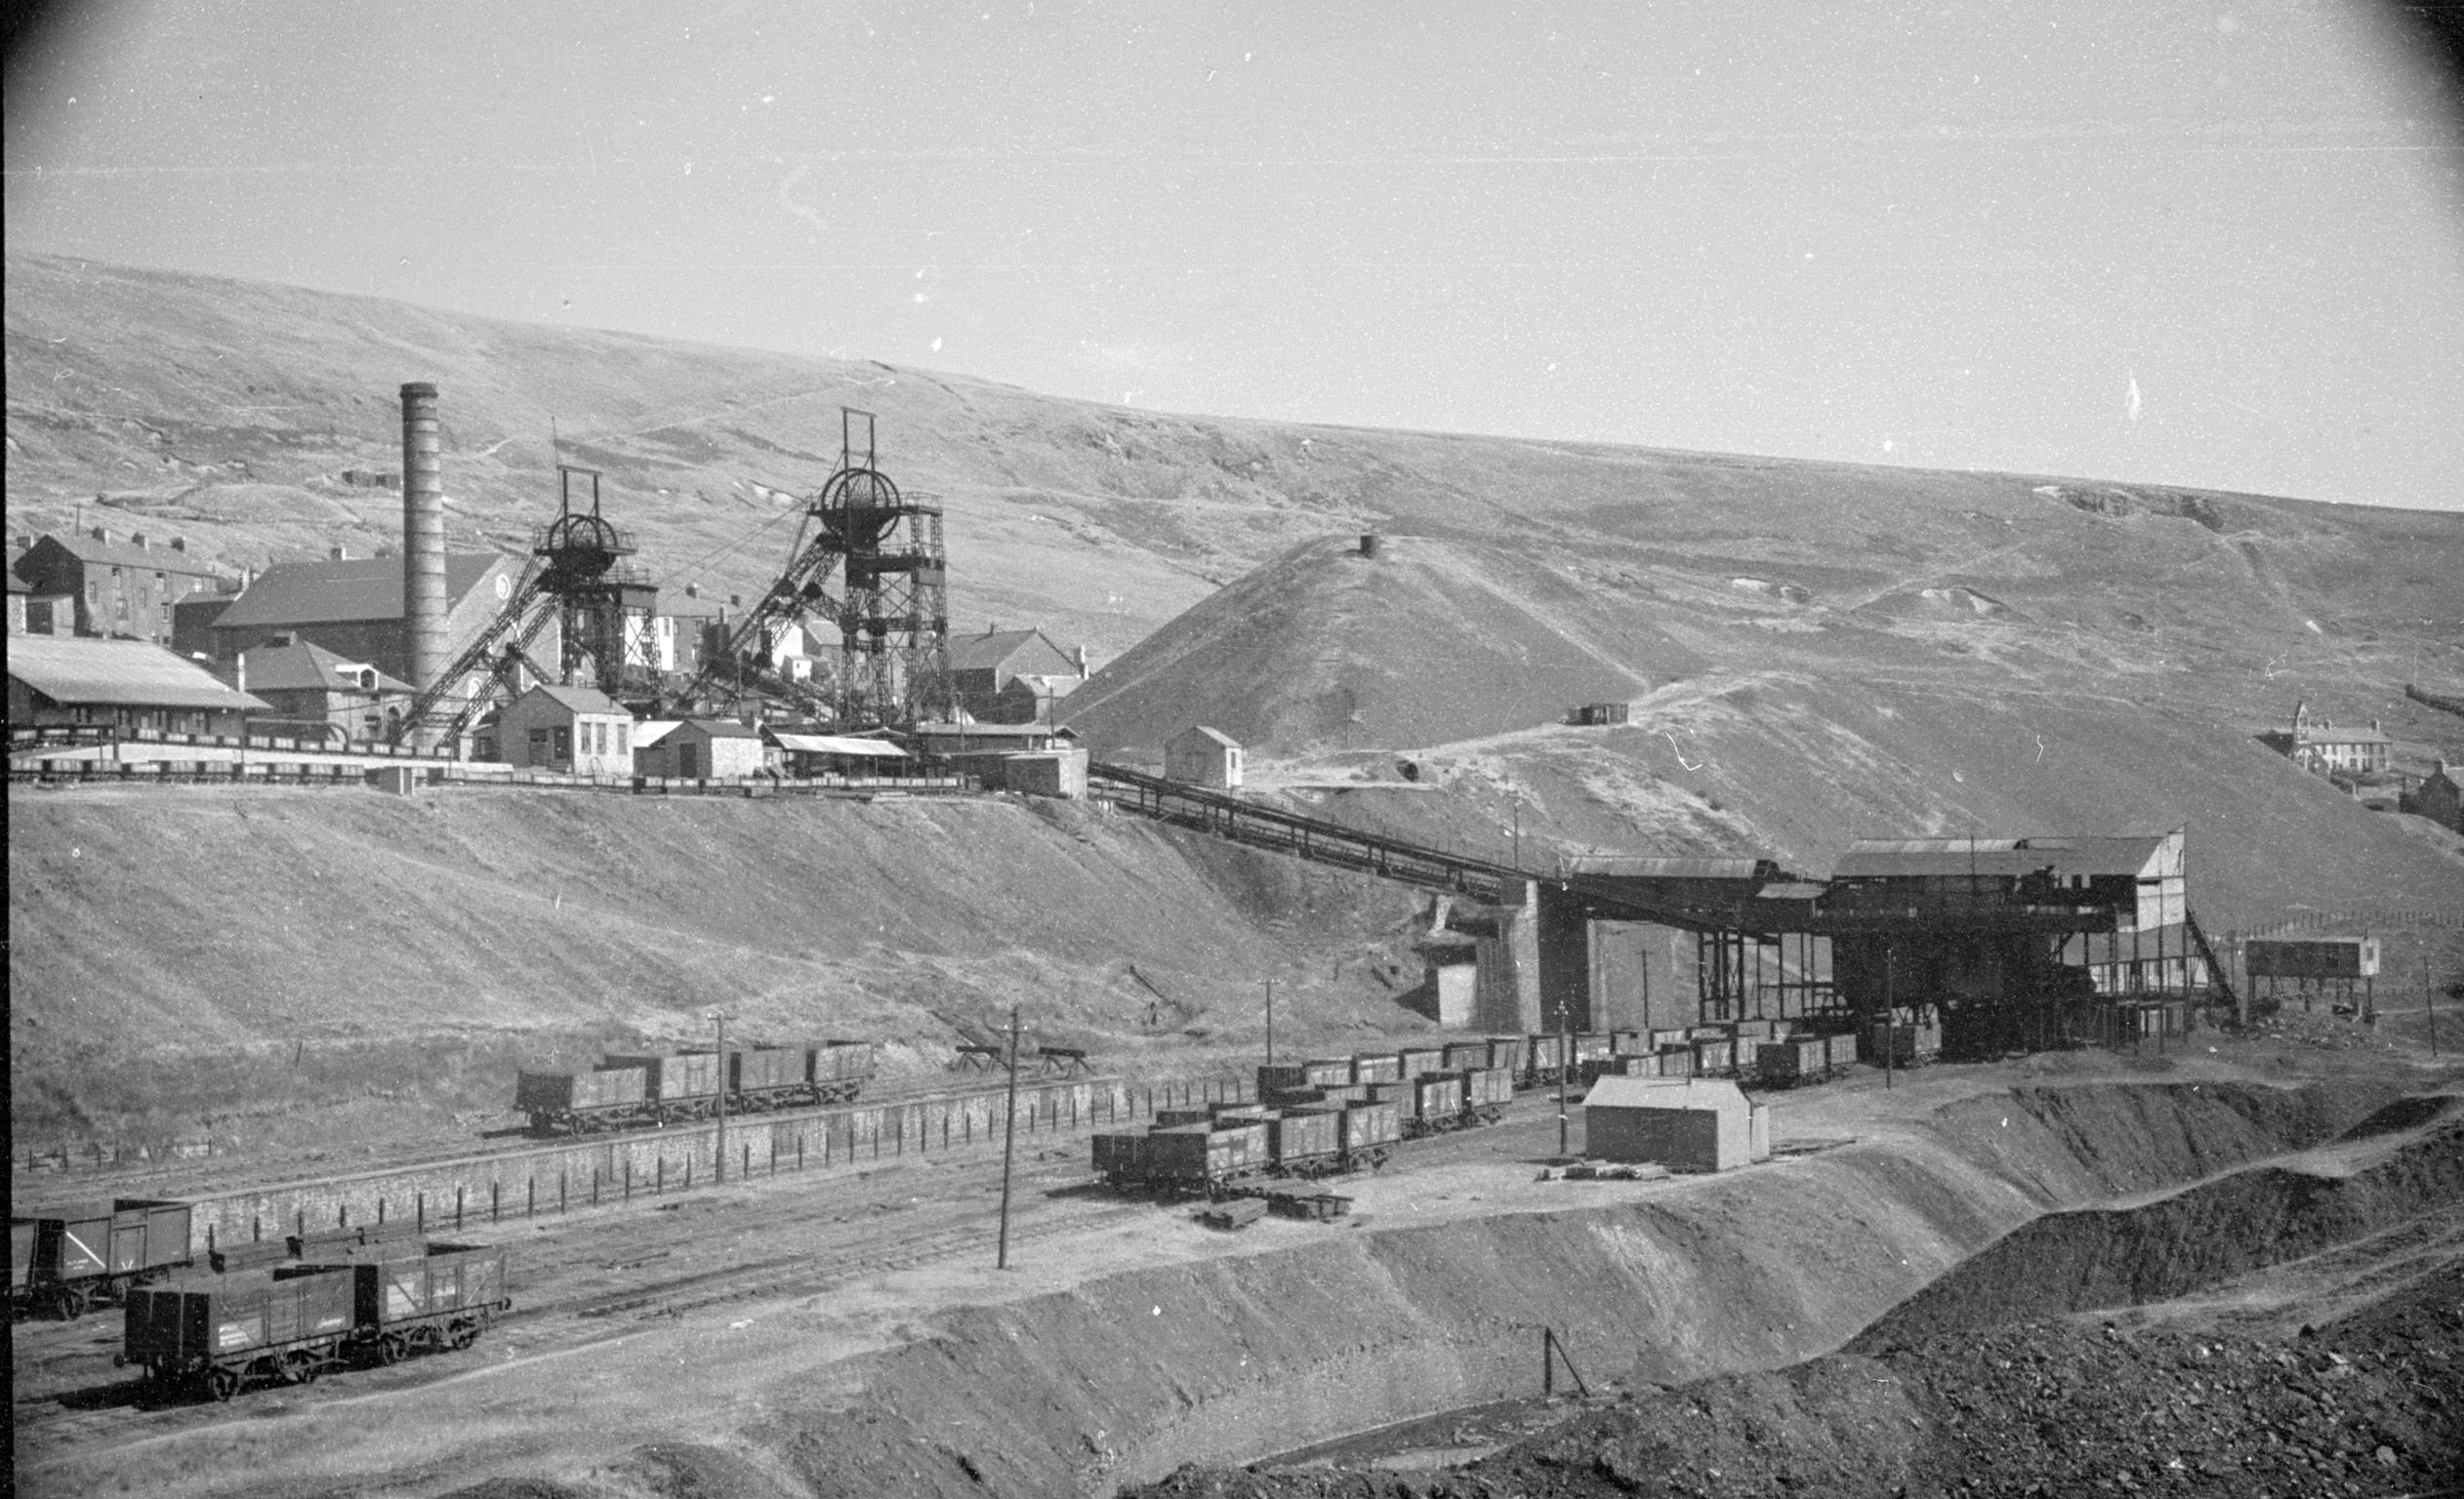 Britannic Colliery, film negative